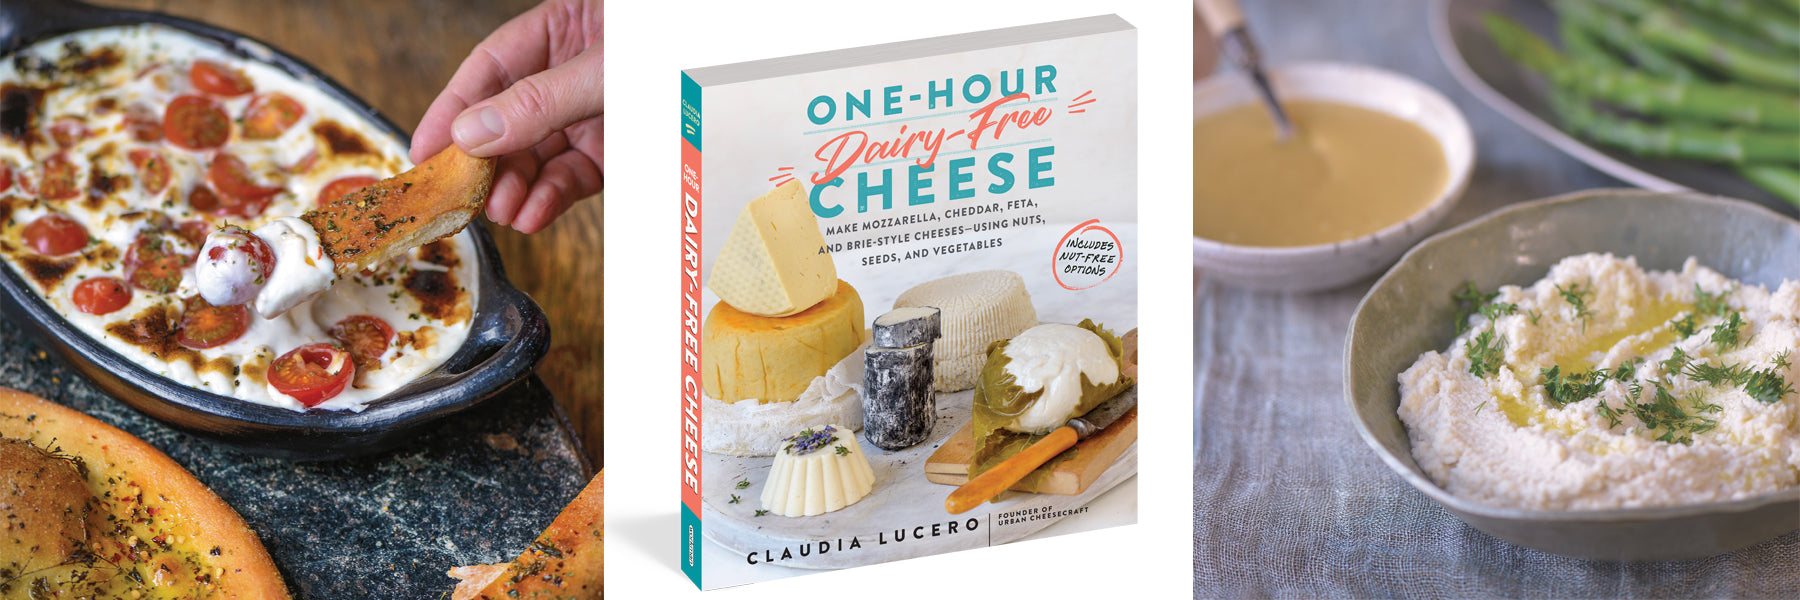 one hour dairy free cheese vegan paleo claudia lucero portland oregon